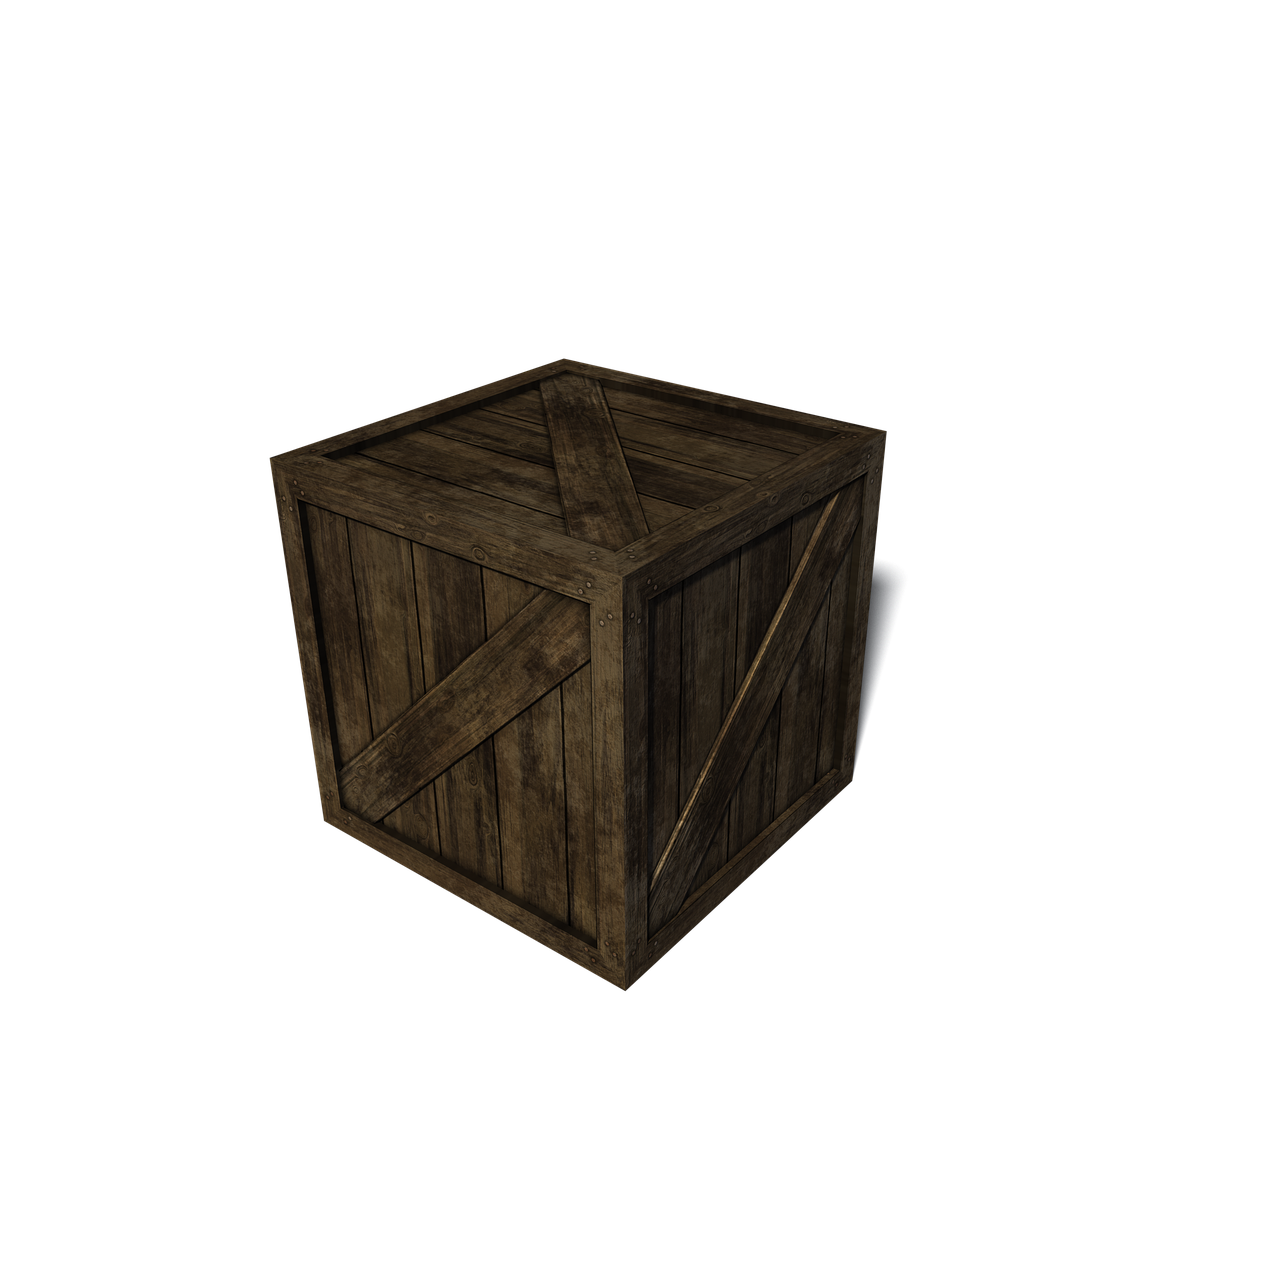 woody box wood box square wooden blocks free photo